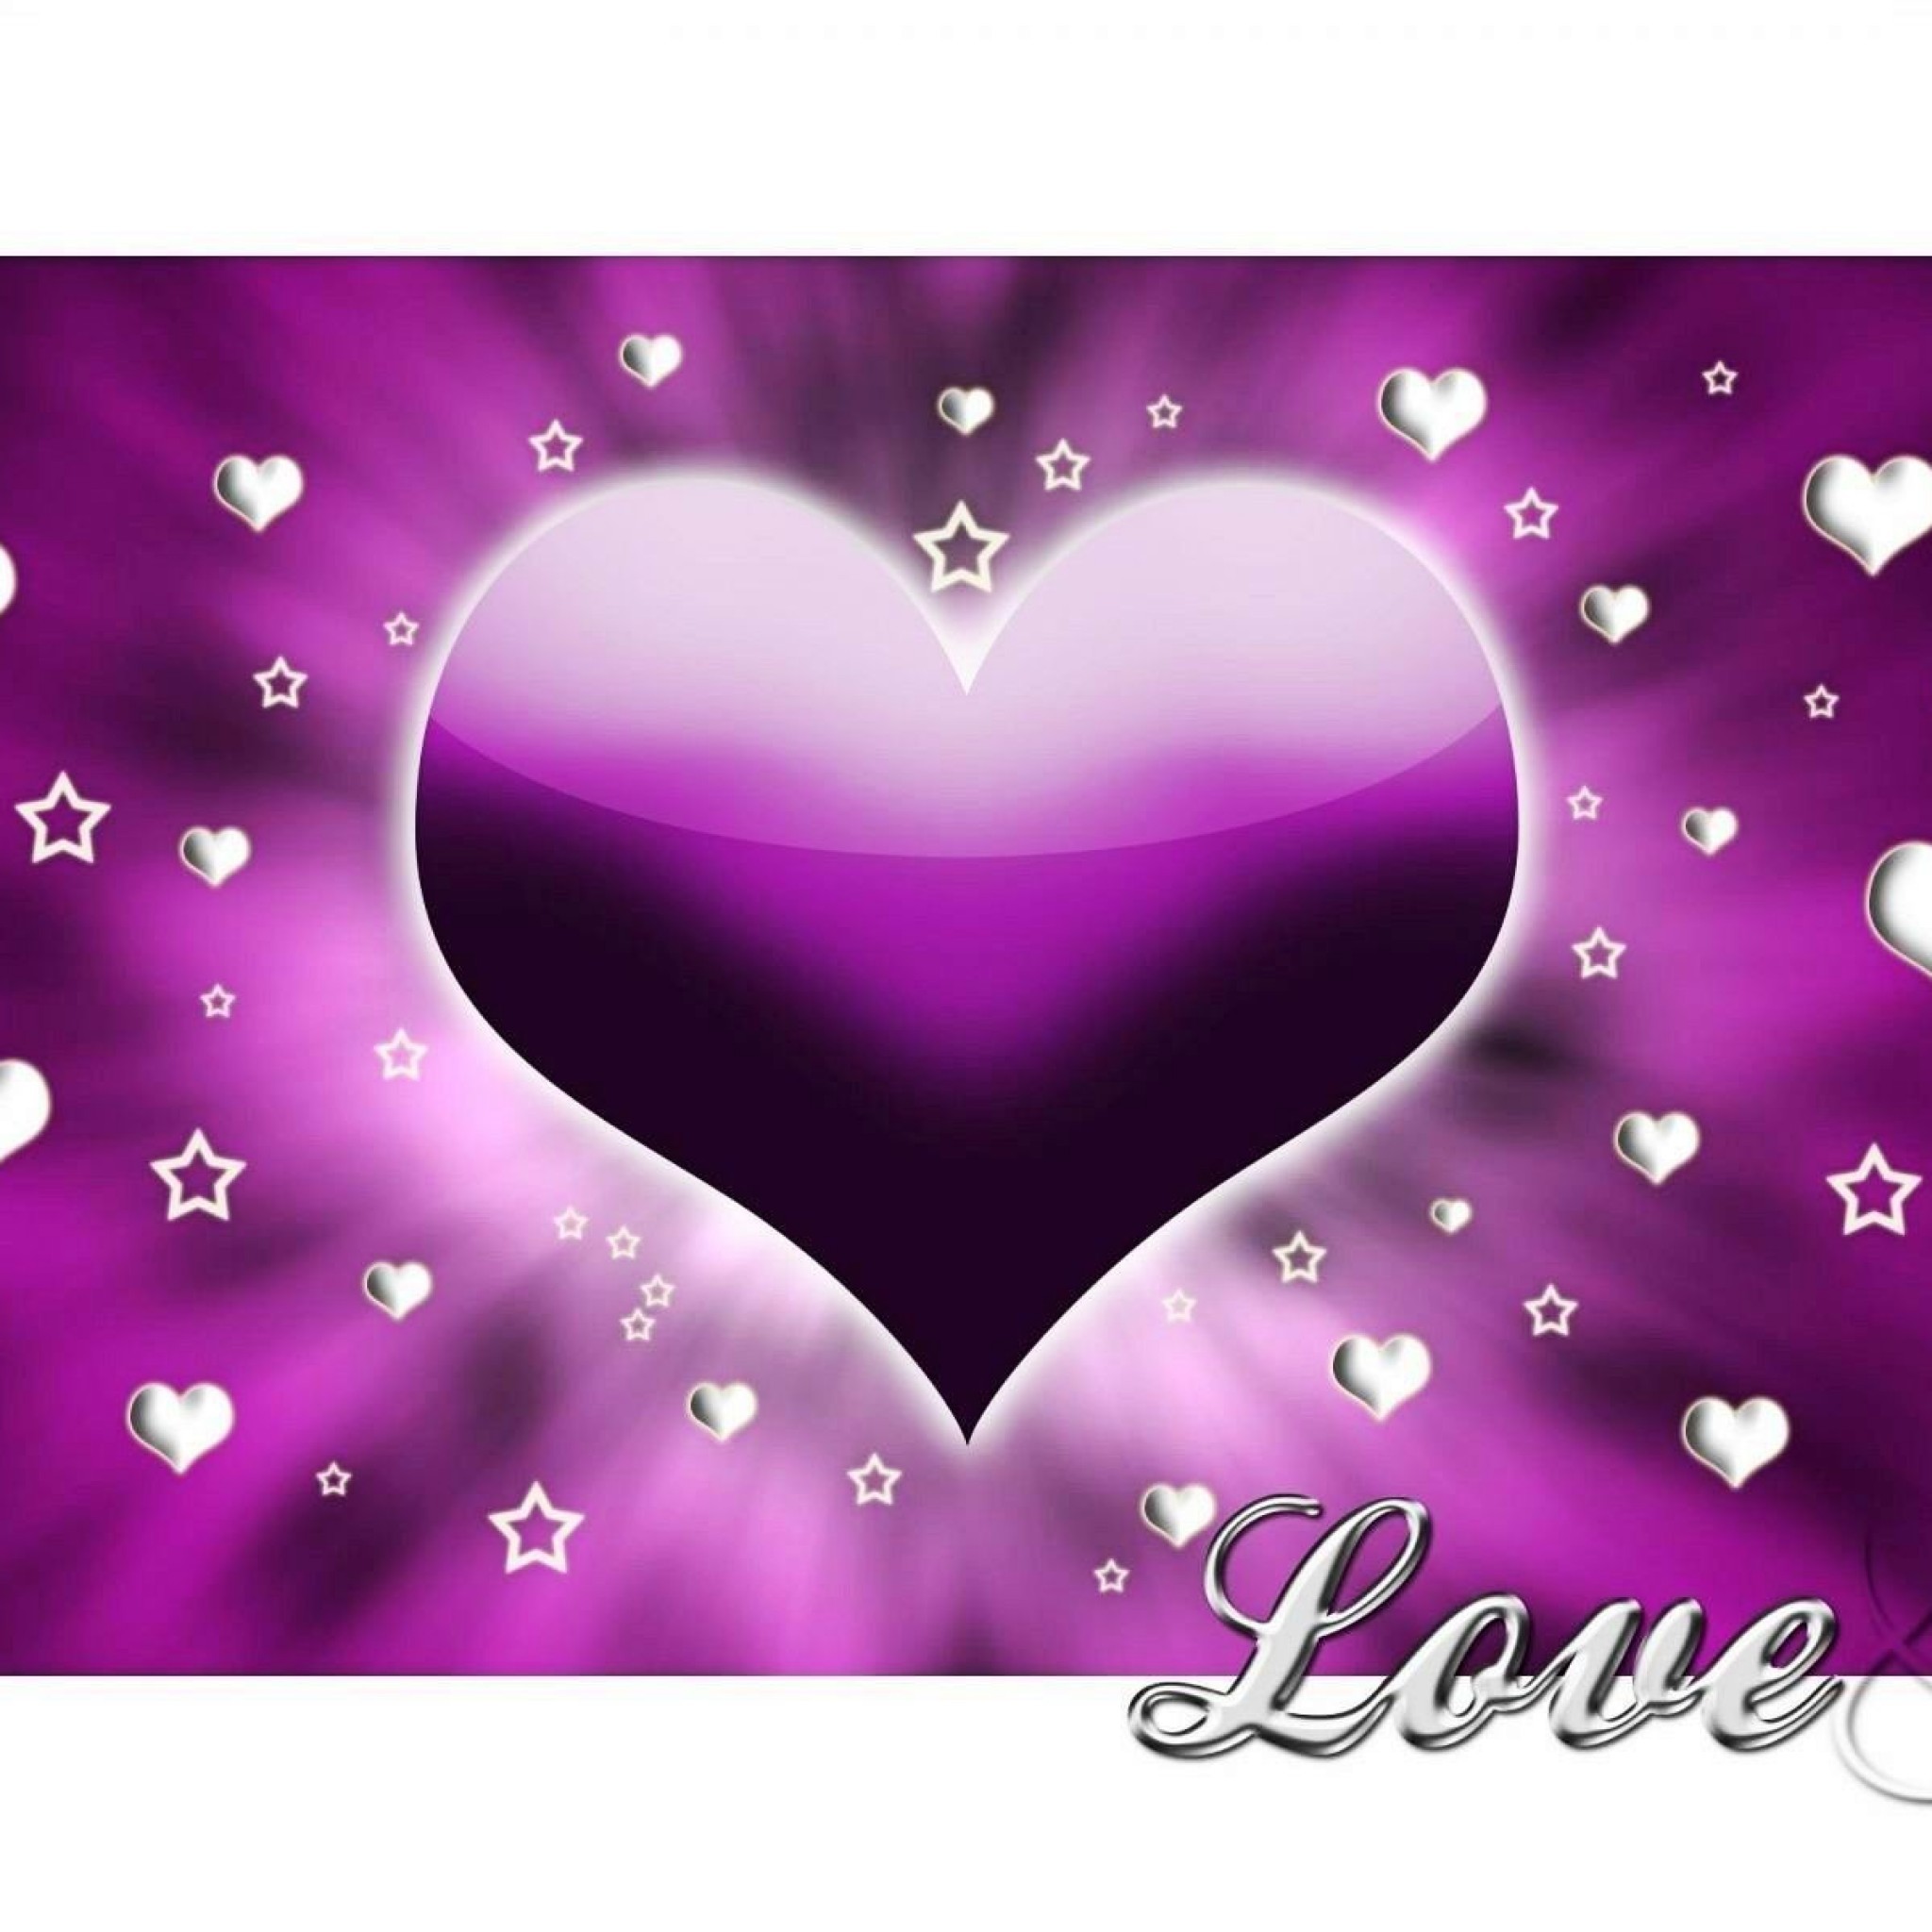 heart purple white love image wallpaper Wallpaper